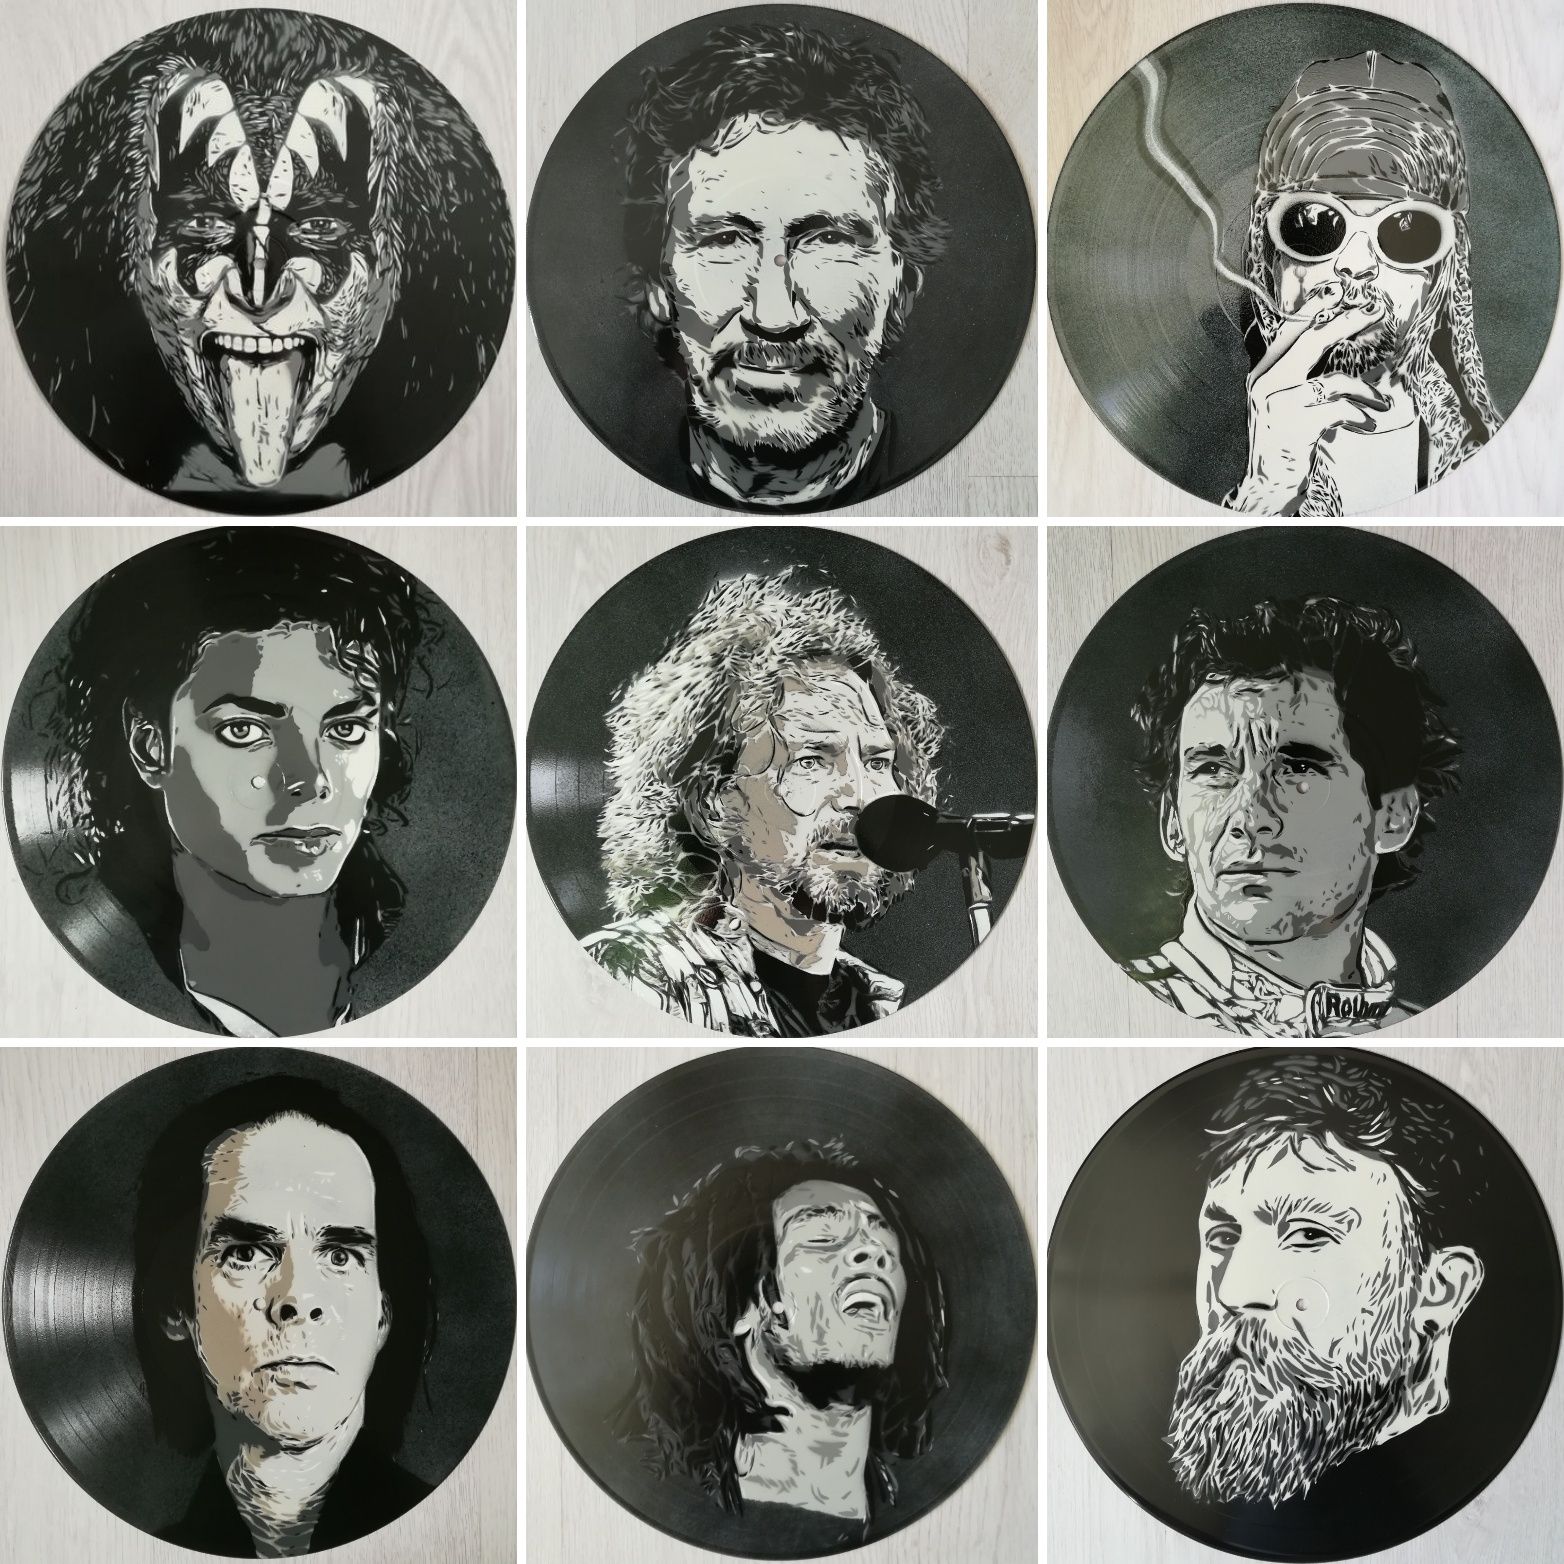 David Bowie, Bob Dylan, Jim Morrisson, etc. pinturas originais